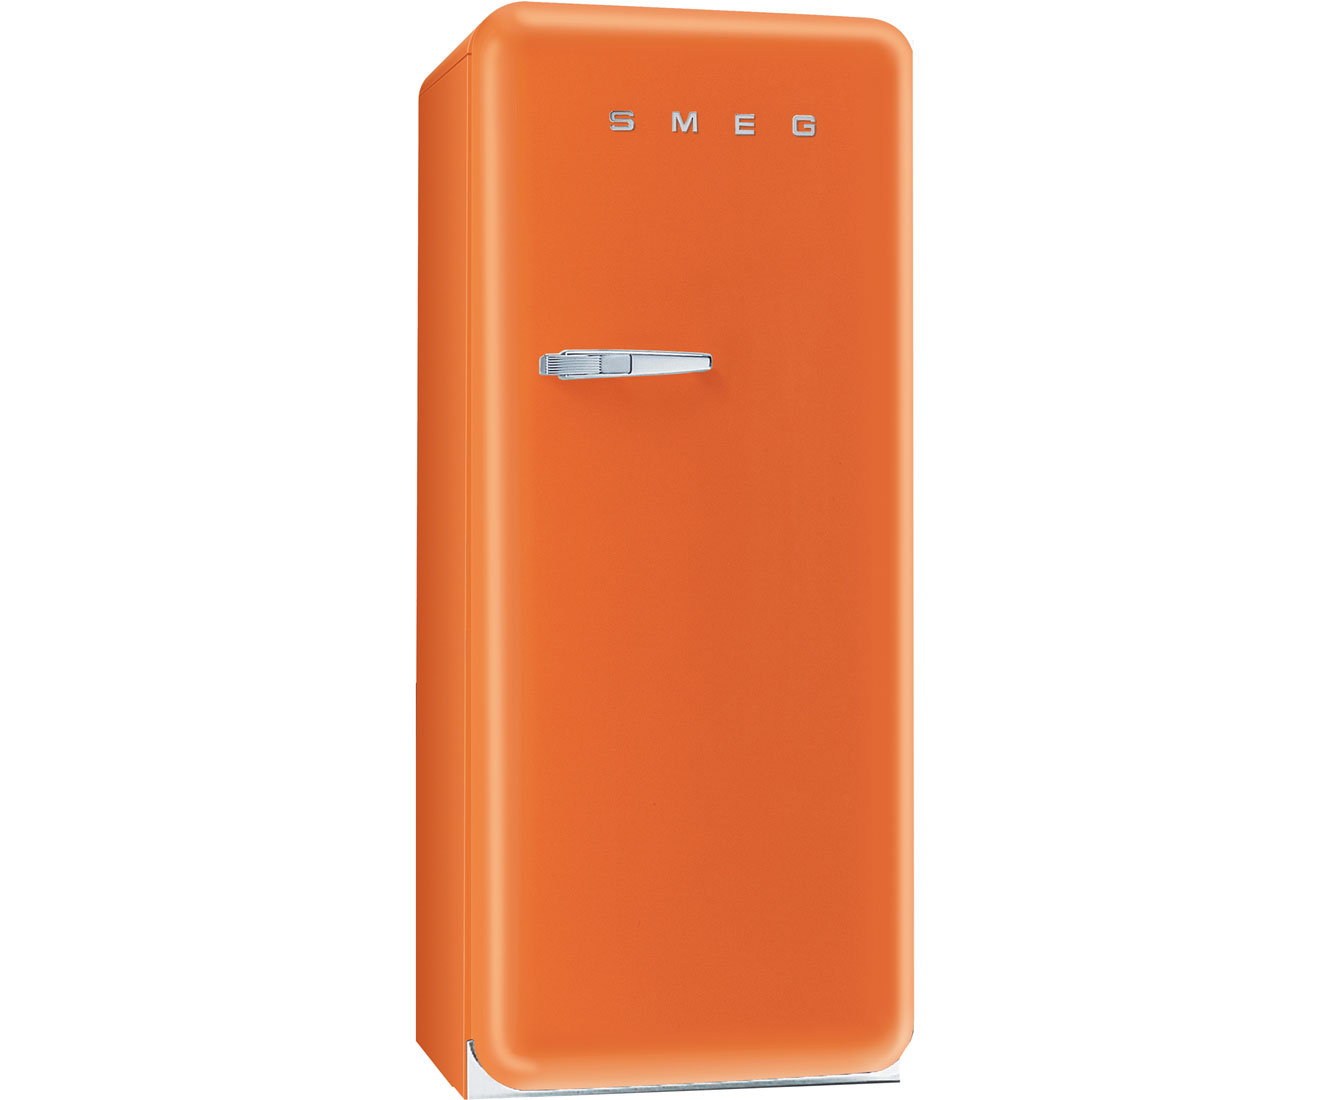 Smeg Right Hand Hinge FAB28QO1 Free Standing Refrigerator in Orange